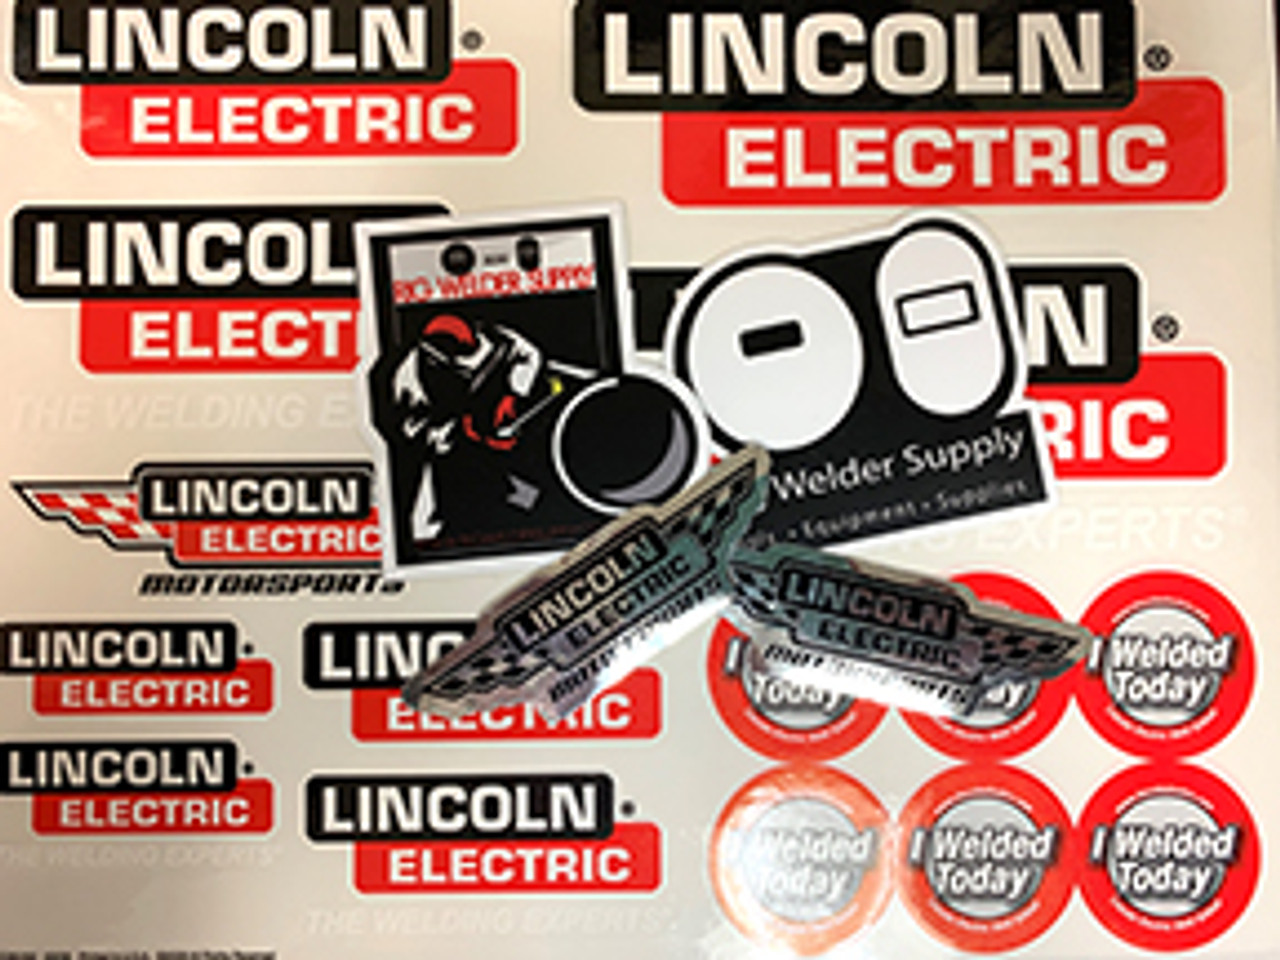 Rig Welder Supply & Lincoln Sticker Bundle *FREE Shipping*